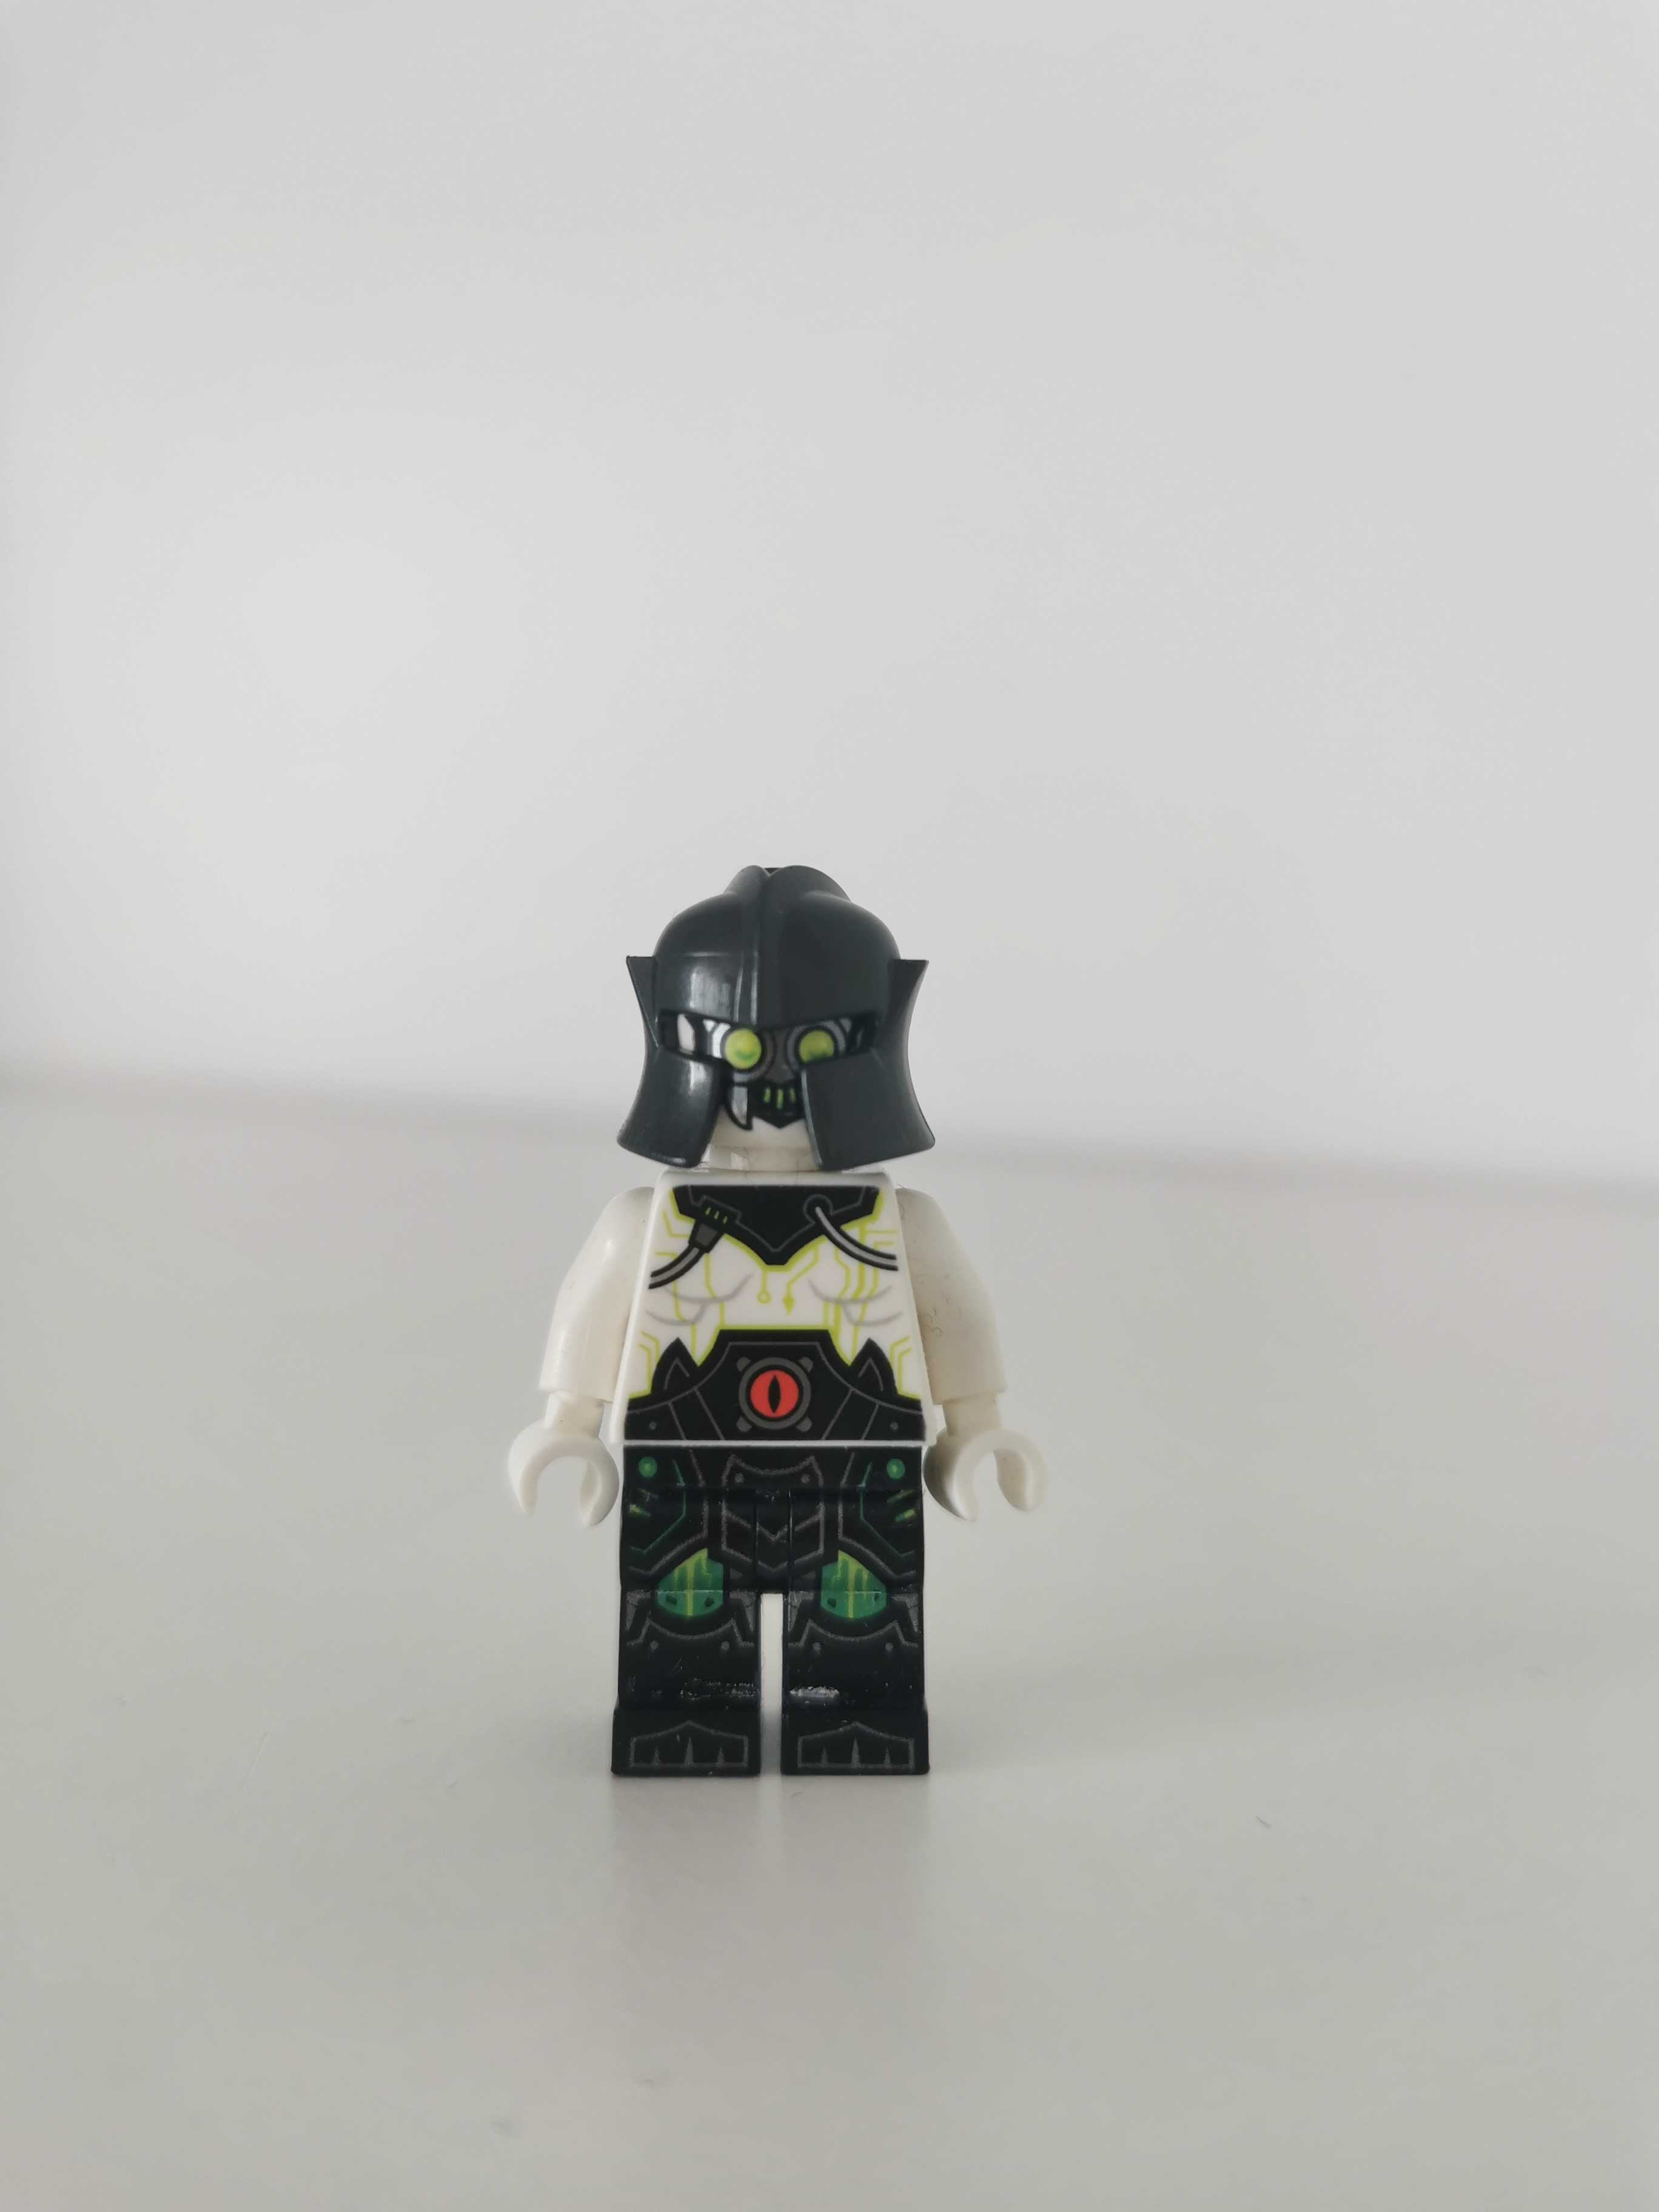 Nexo Knights Lego Minifigures
nex127